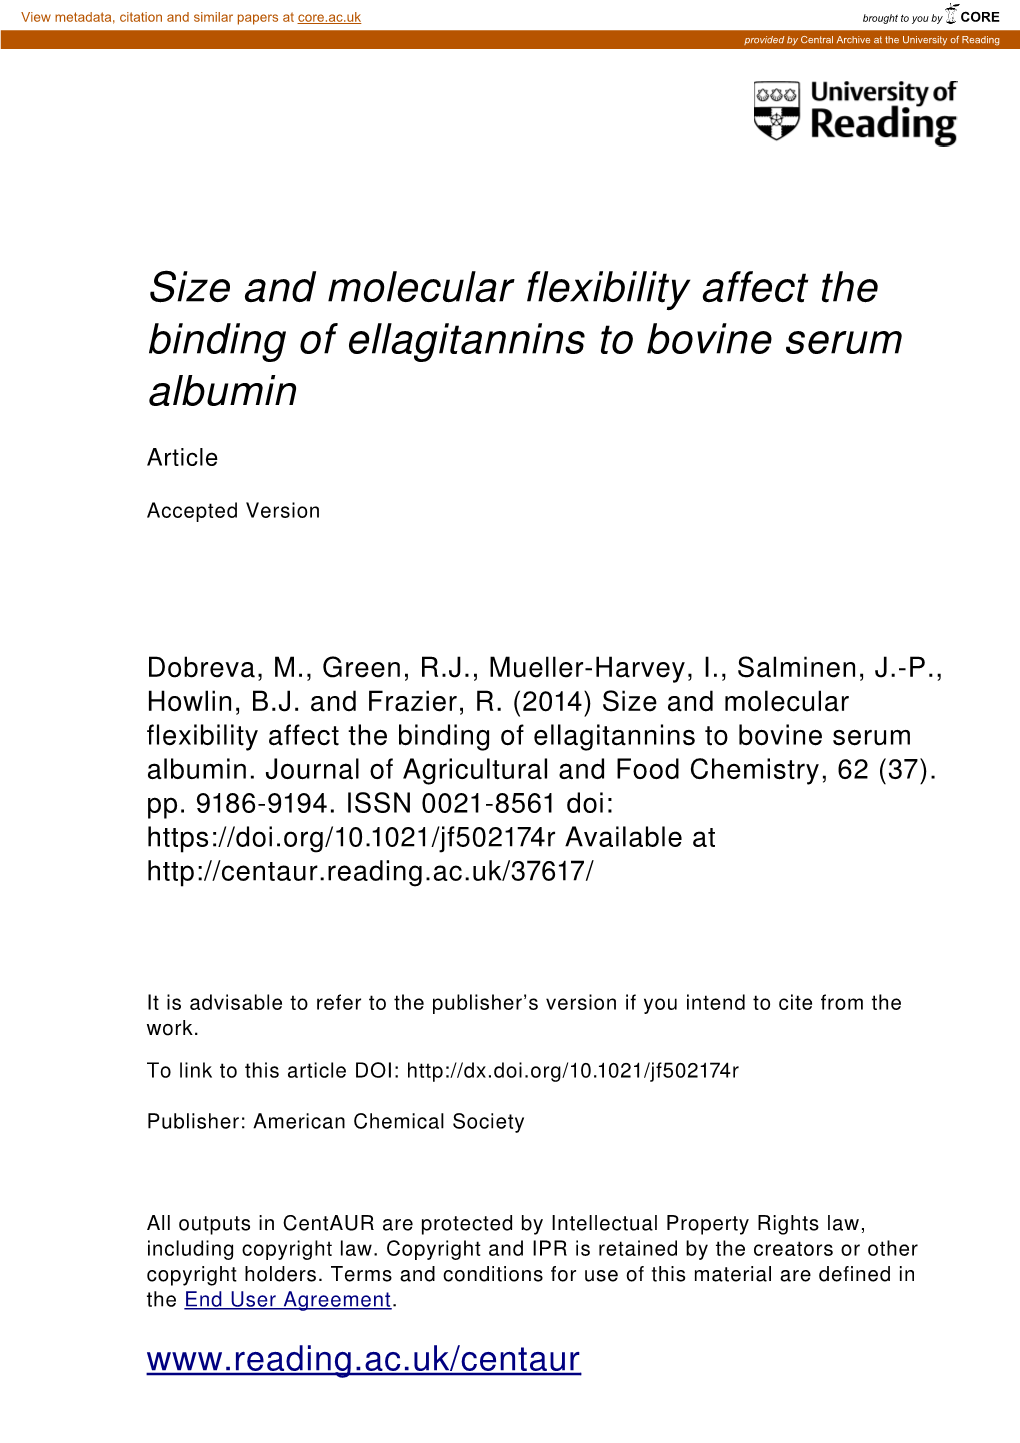 Size and Molecular Flexibility Affect the Binding of Ellagitannins to Bovine Serum Albumin